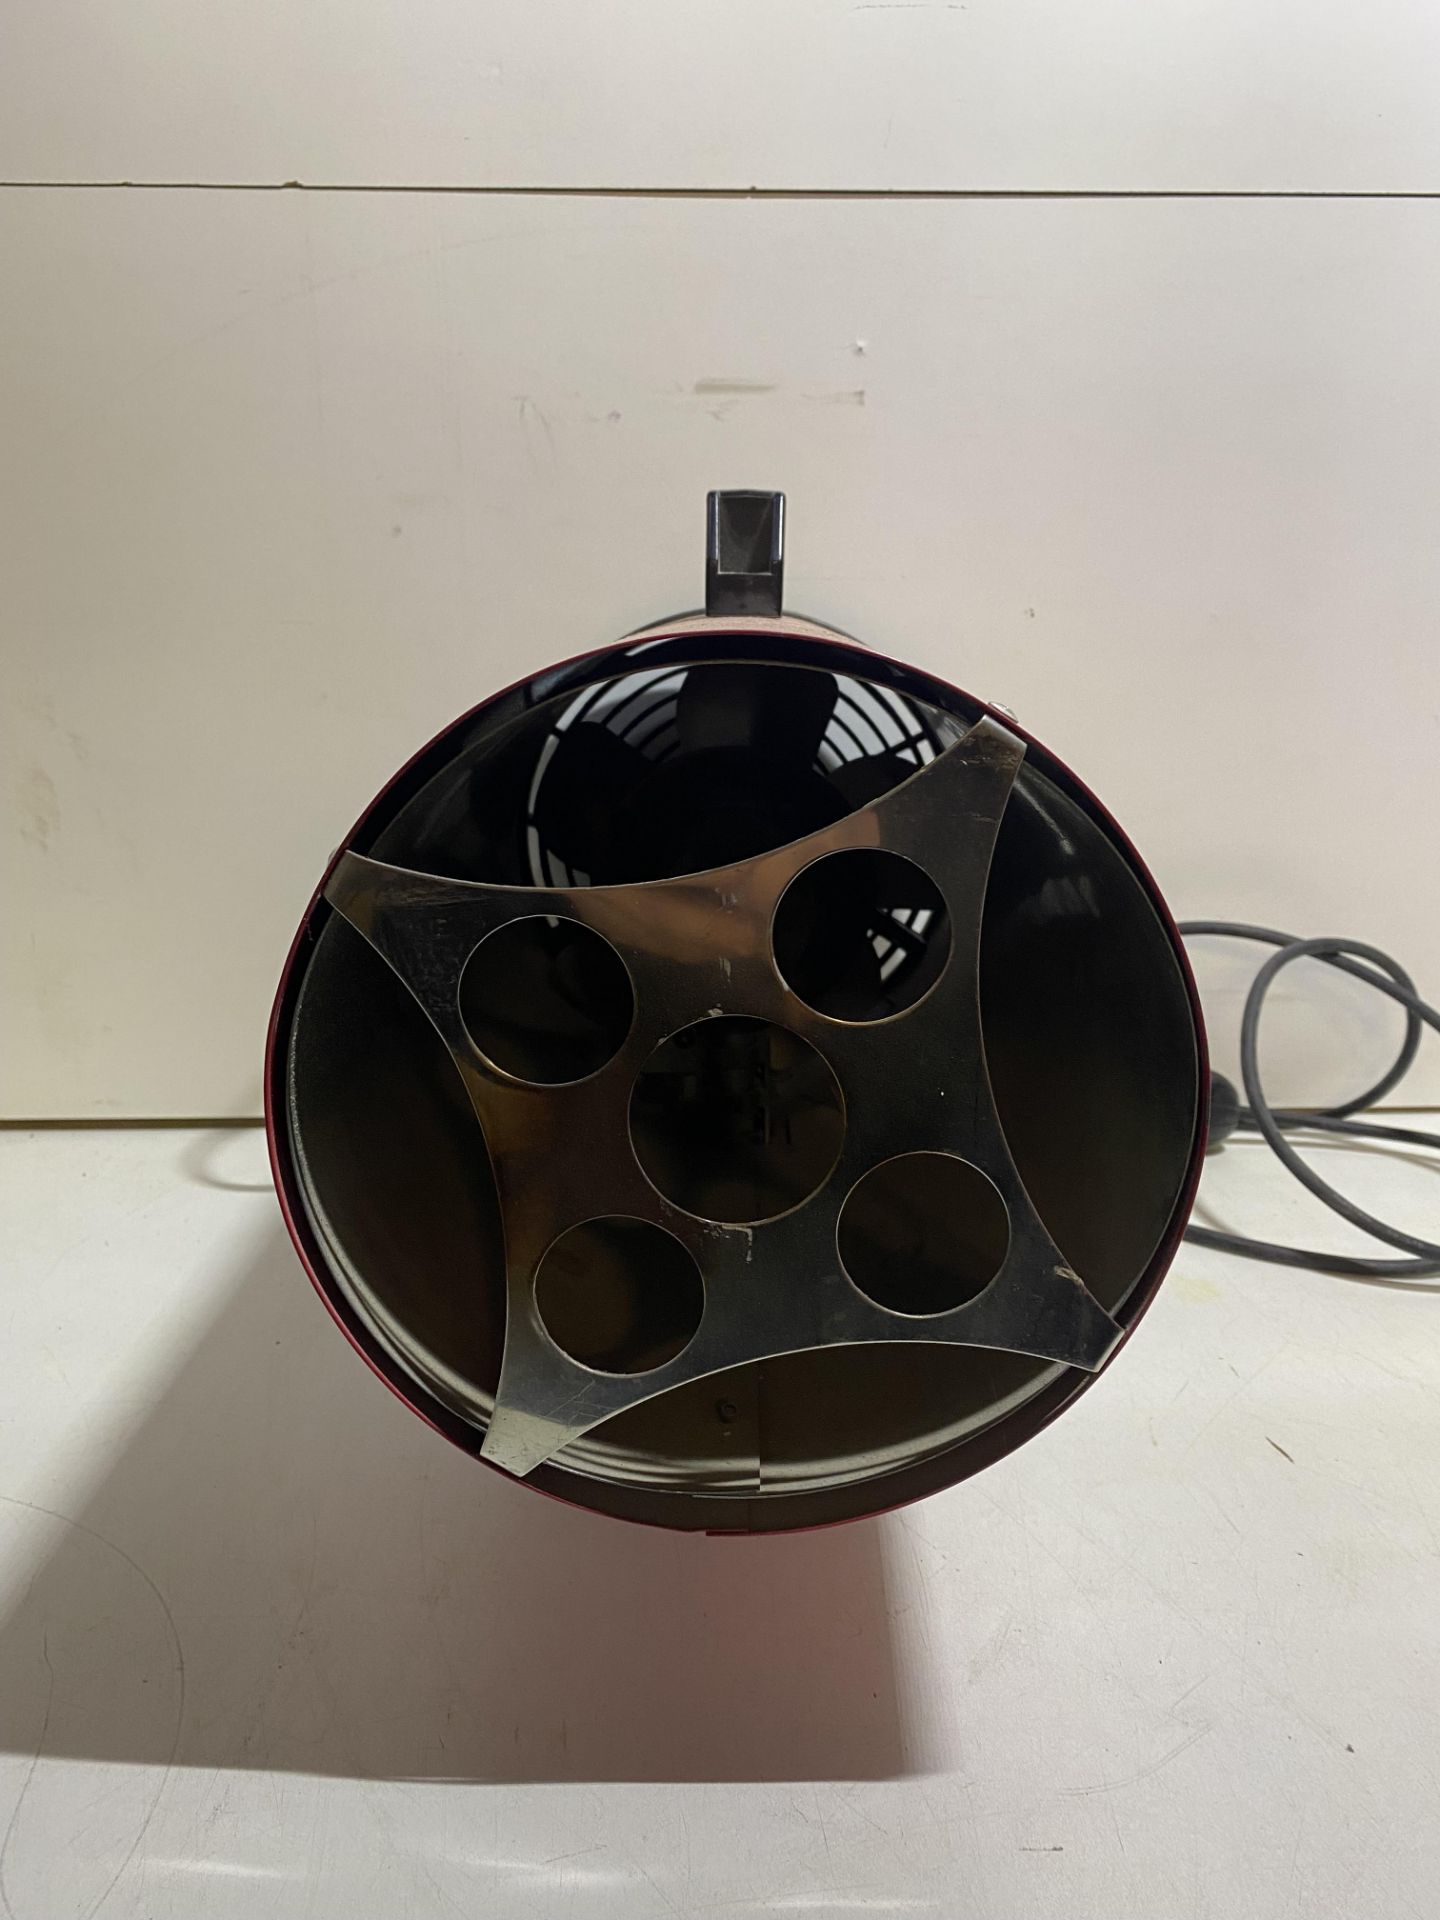 Marko 10KW Propane/LPG Gas Space Heater Electric Fan Assisted Powerful Workshop Heat - Image 2 of 5